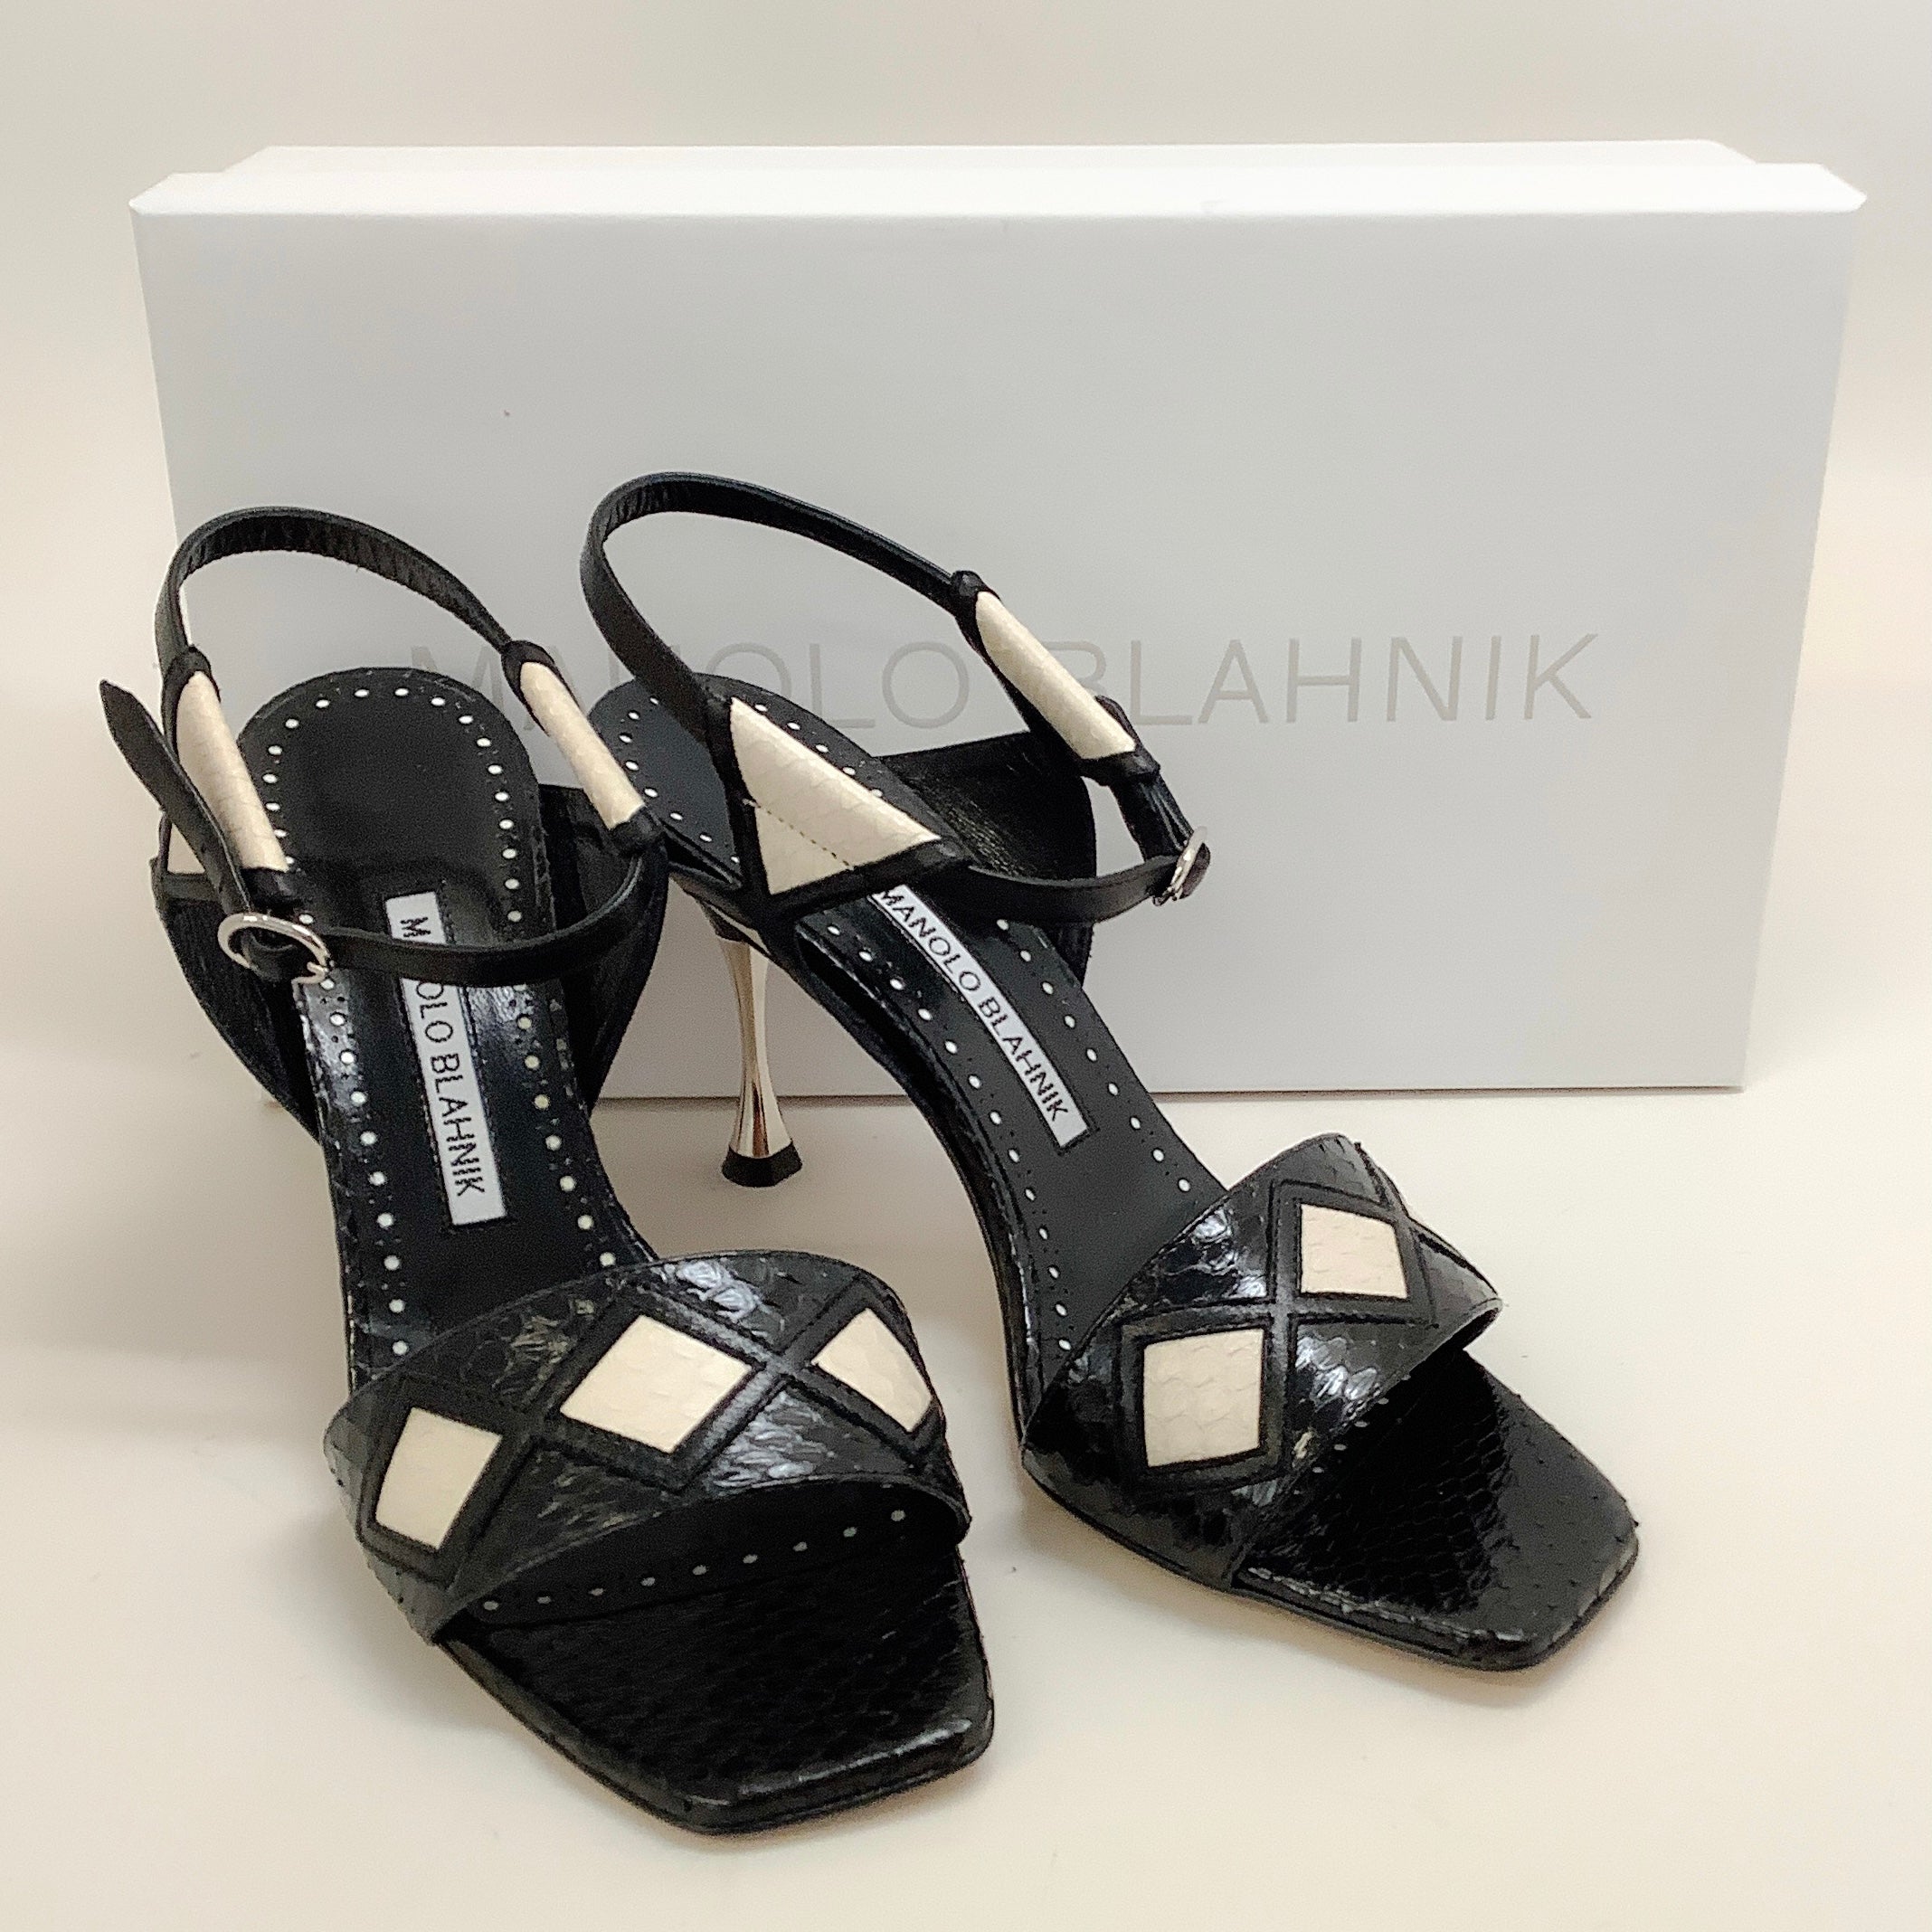 Manolo Blahnik Black / White Snake Jarba Sandals